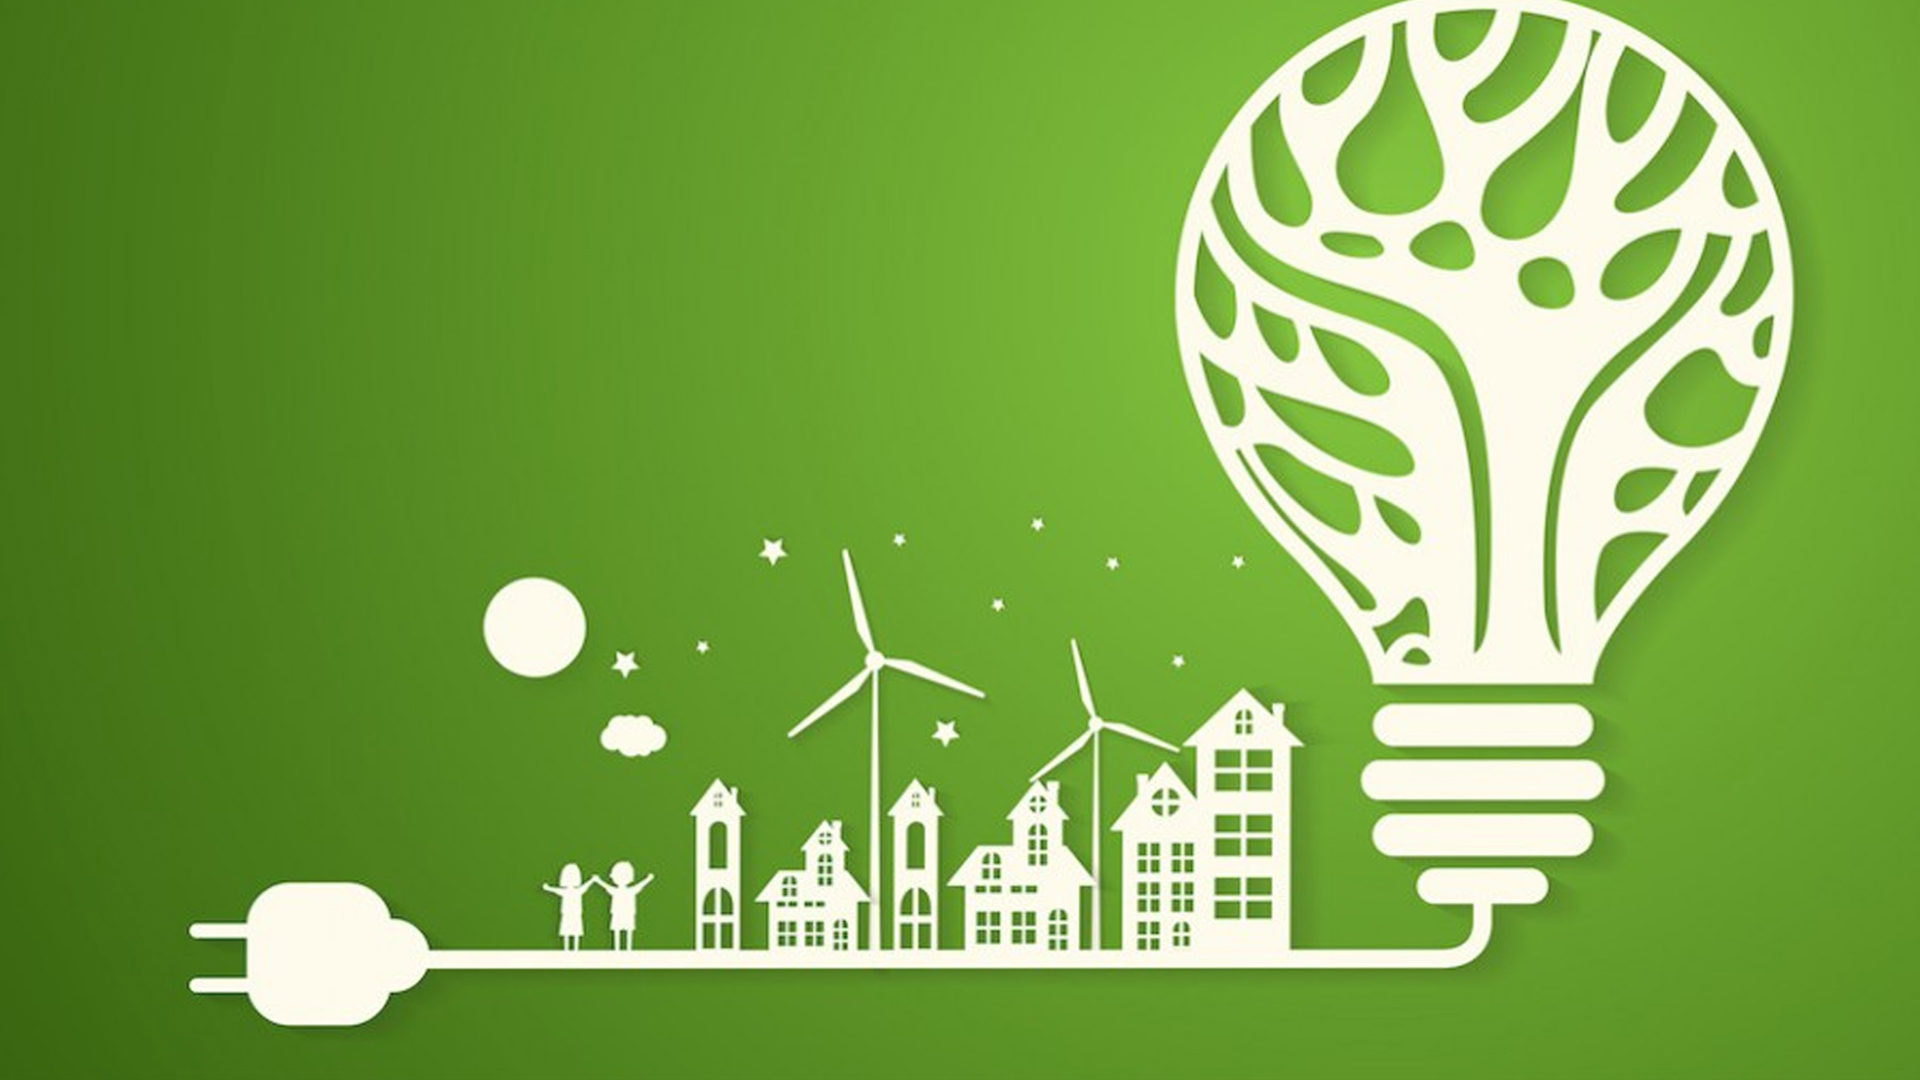 Godrej & Boyce strengthens India's goals towards energy conservation -  Construction Week India